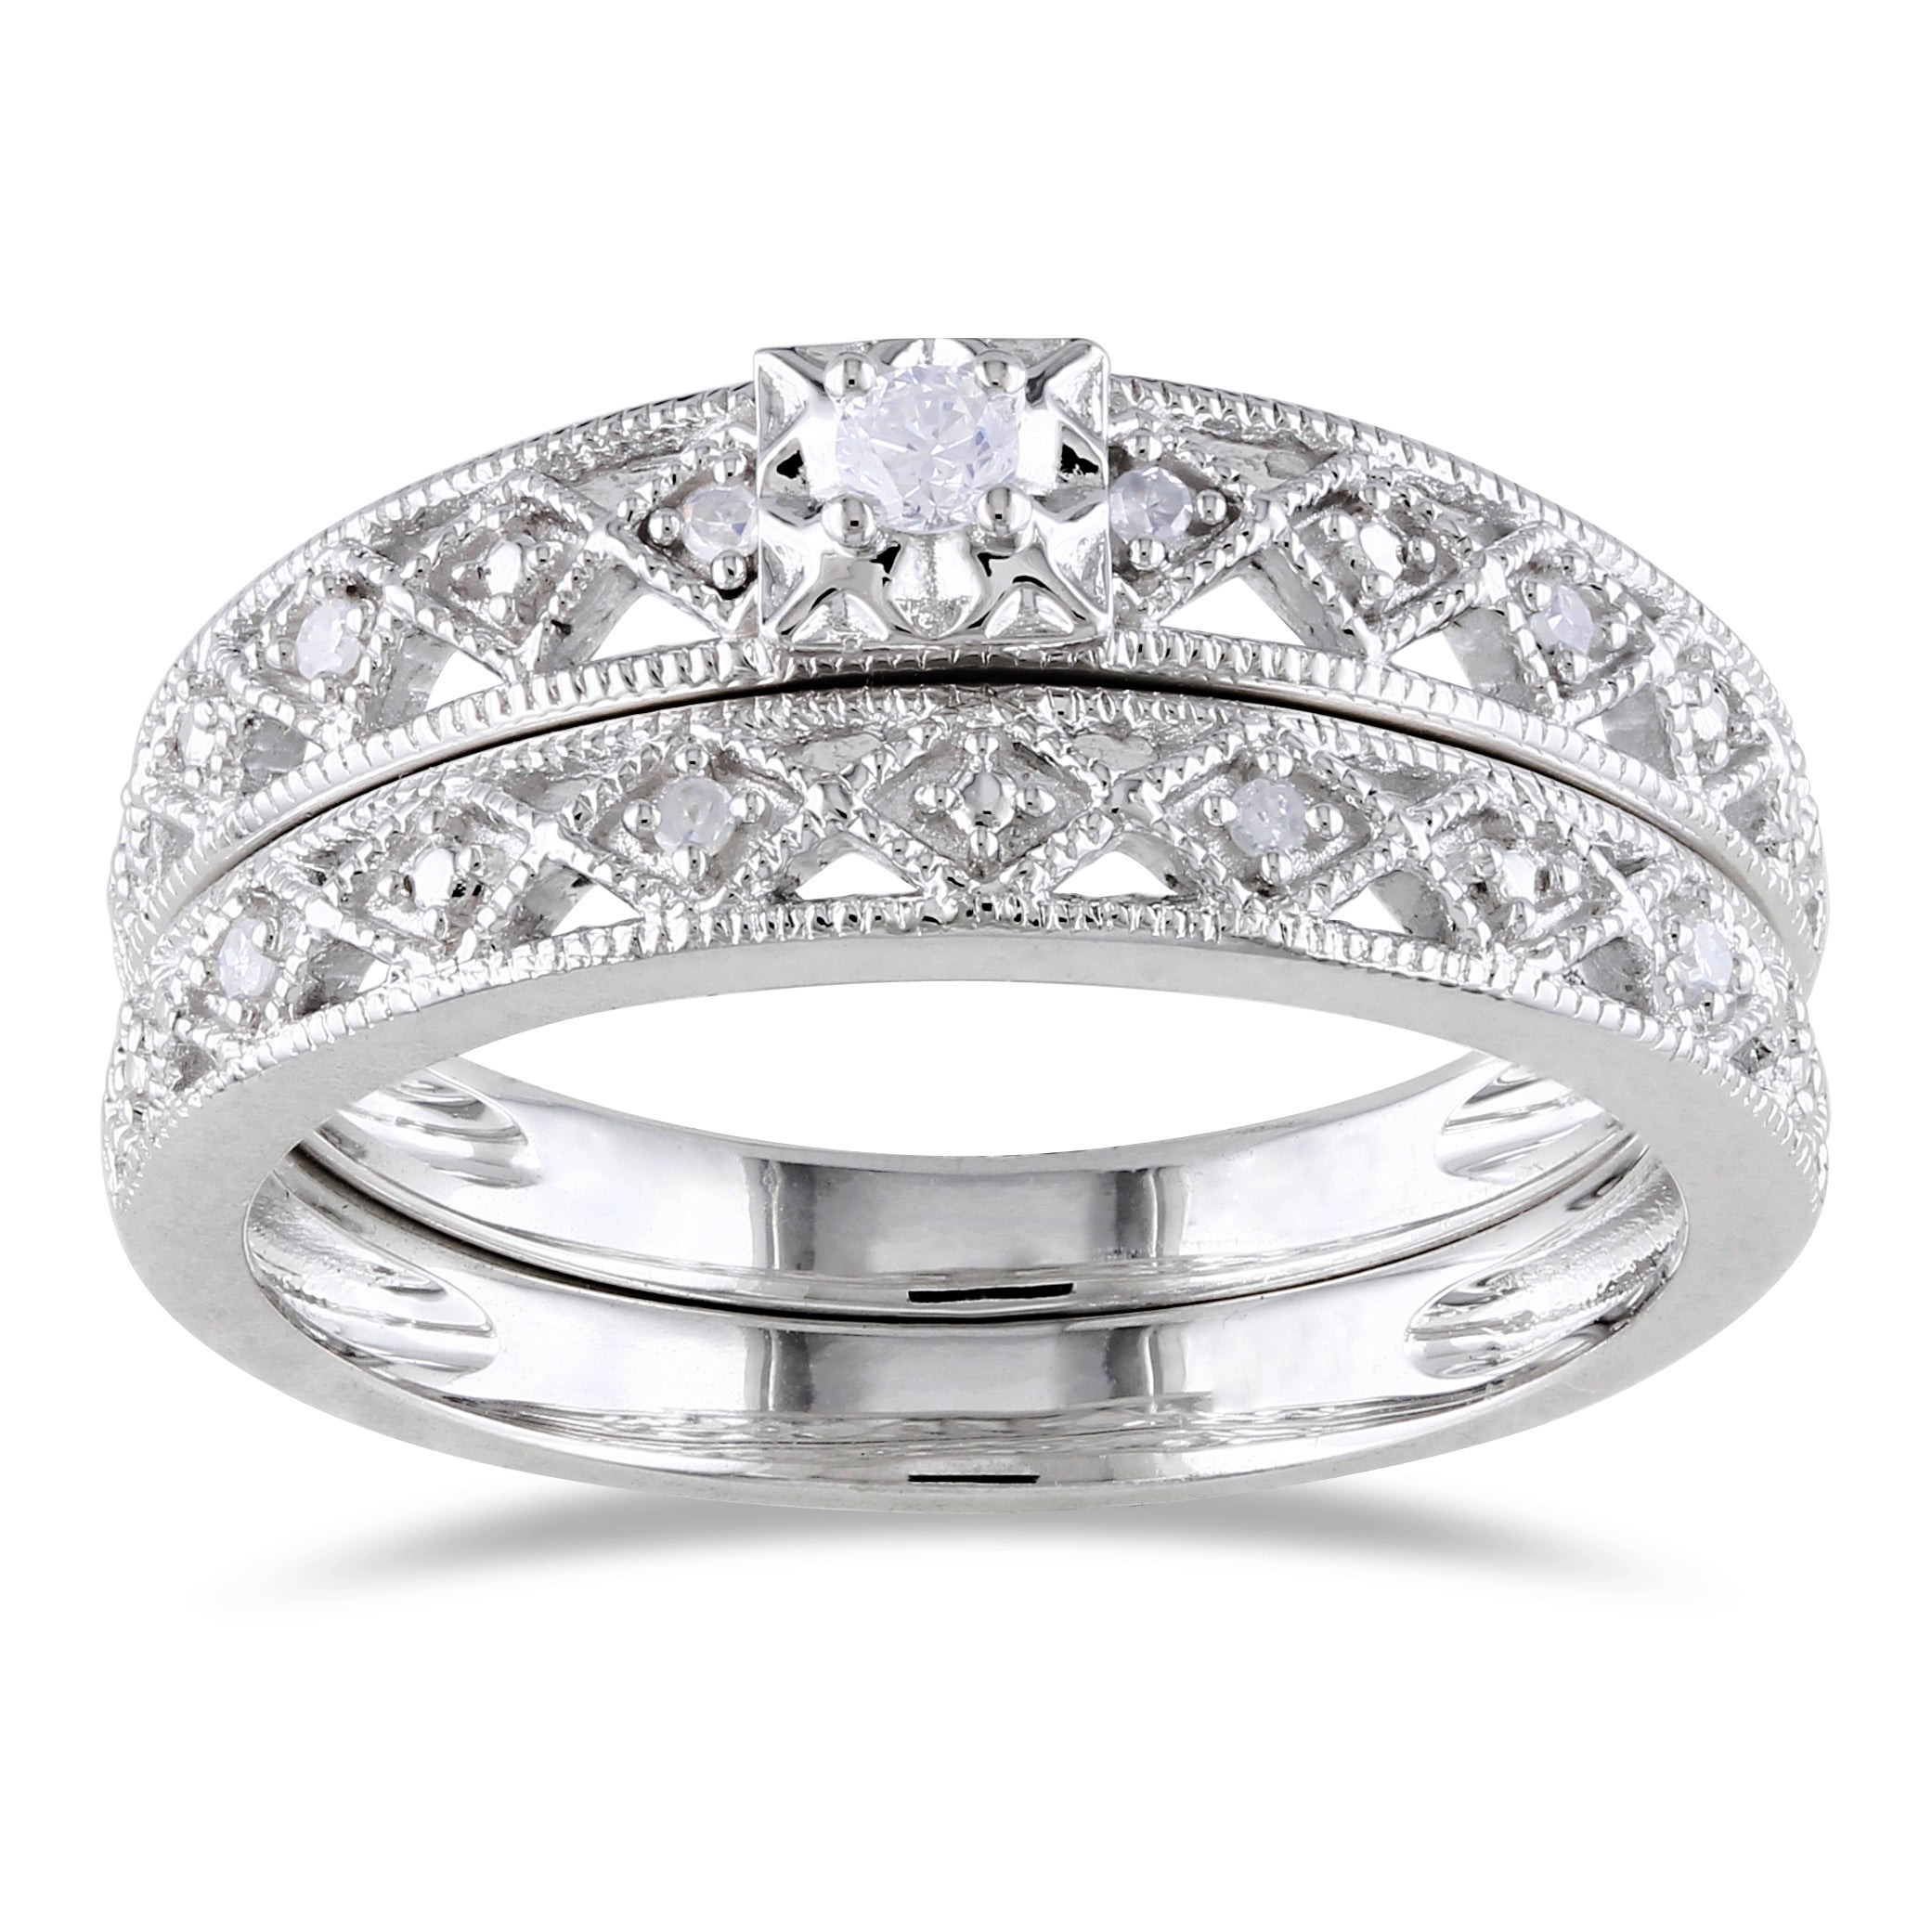 Sterling Silver Diamond Wedding Ring Sets
 Sterling Silver Wedding Rings plete Your Special Day